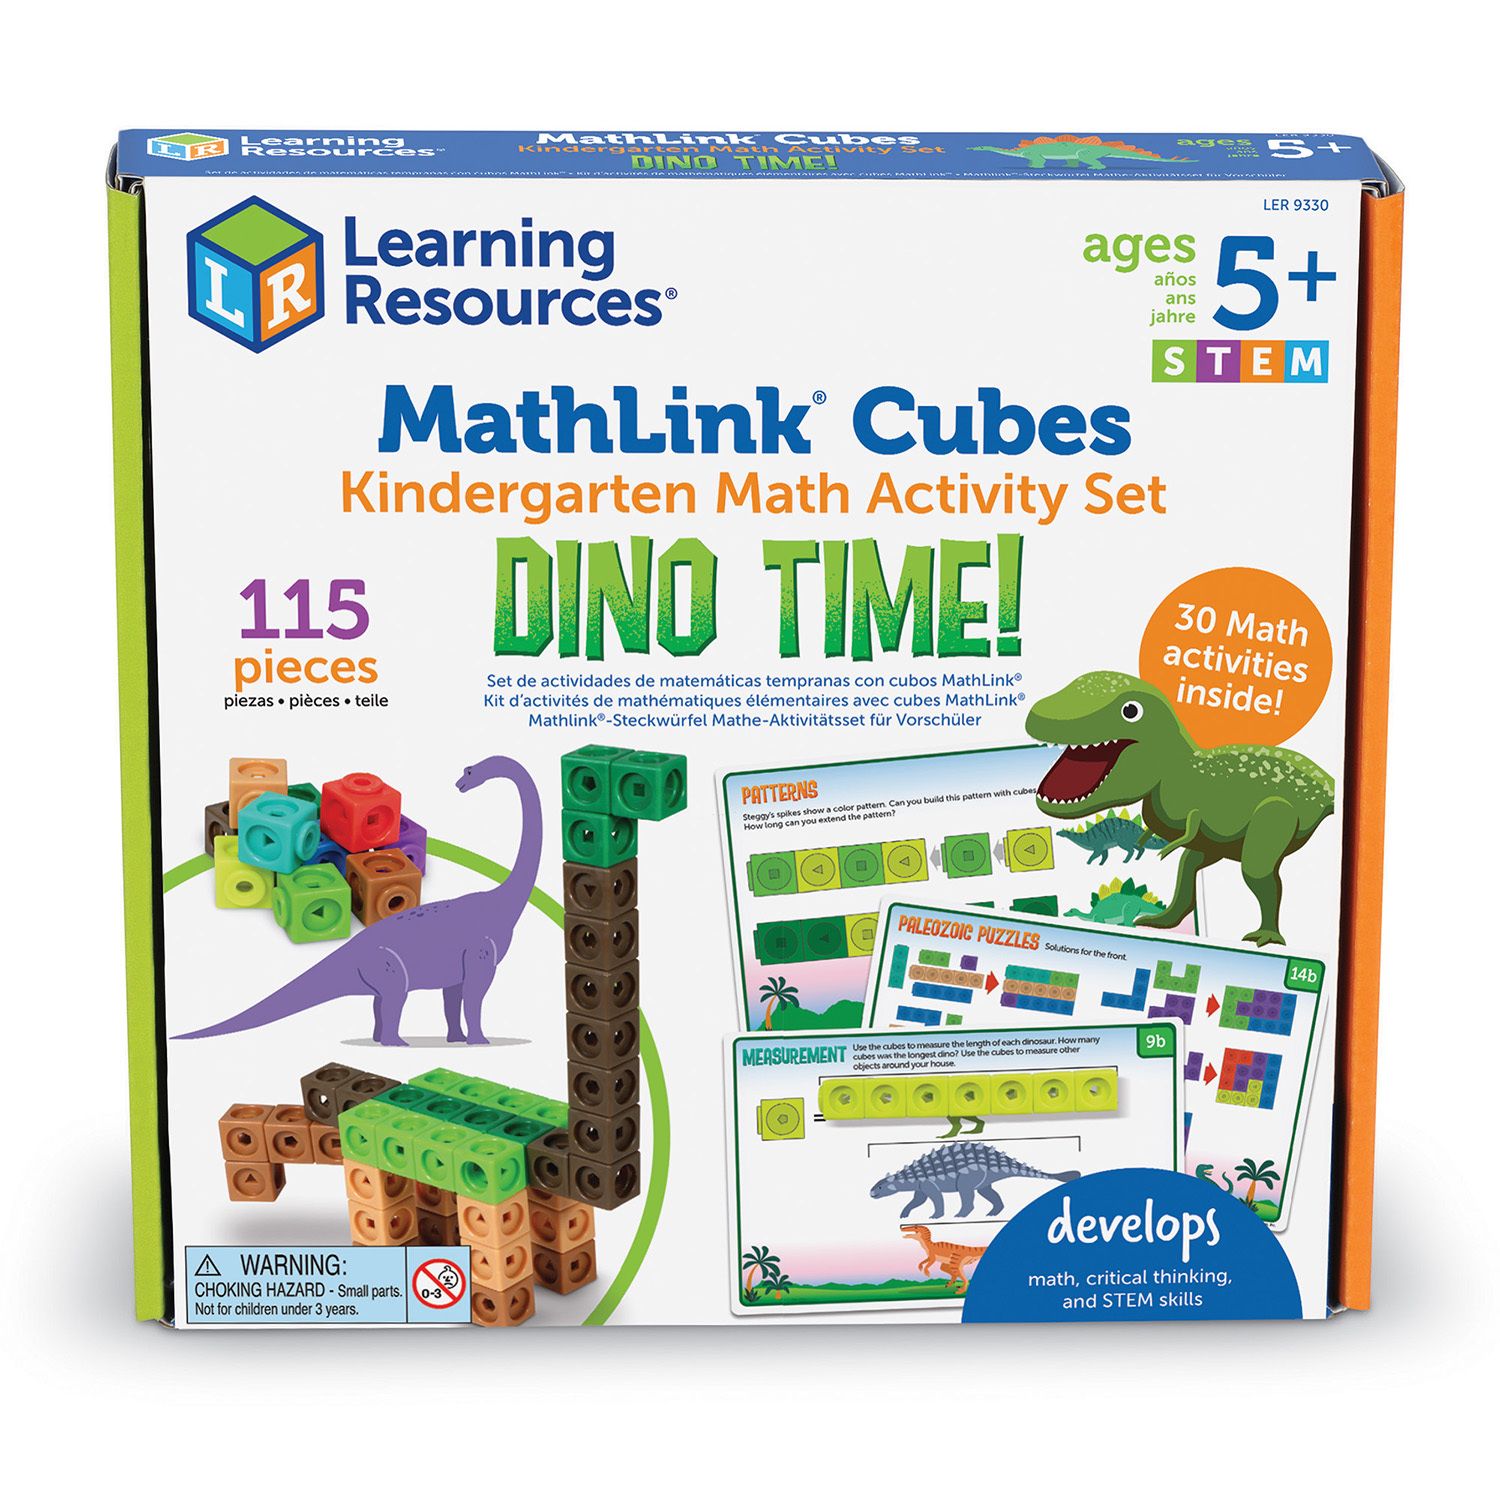 Image for Learning Resources Mathlink Cubes Kindergarten Math Activity Set: Dino Time! at Kohl's.